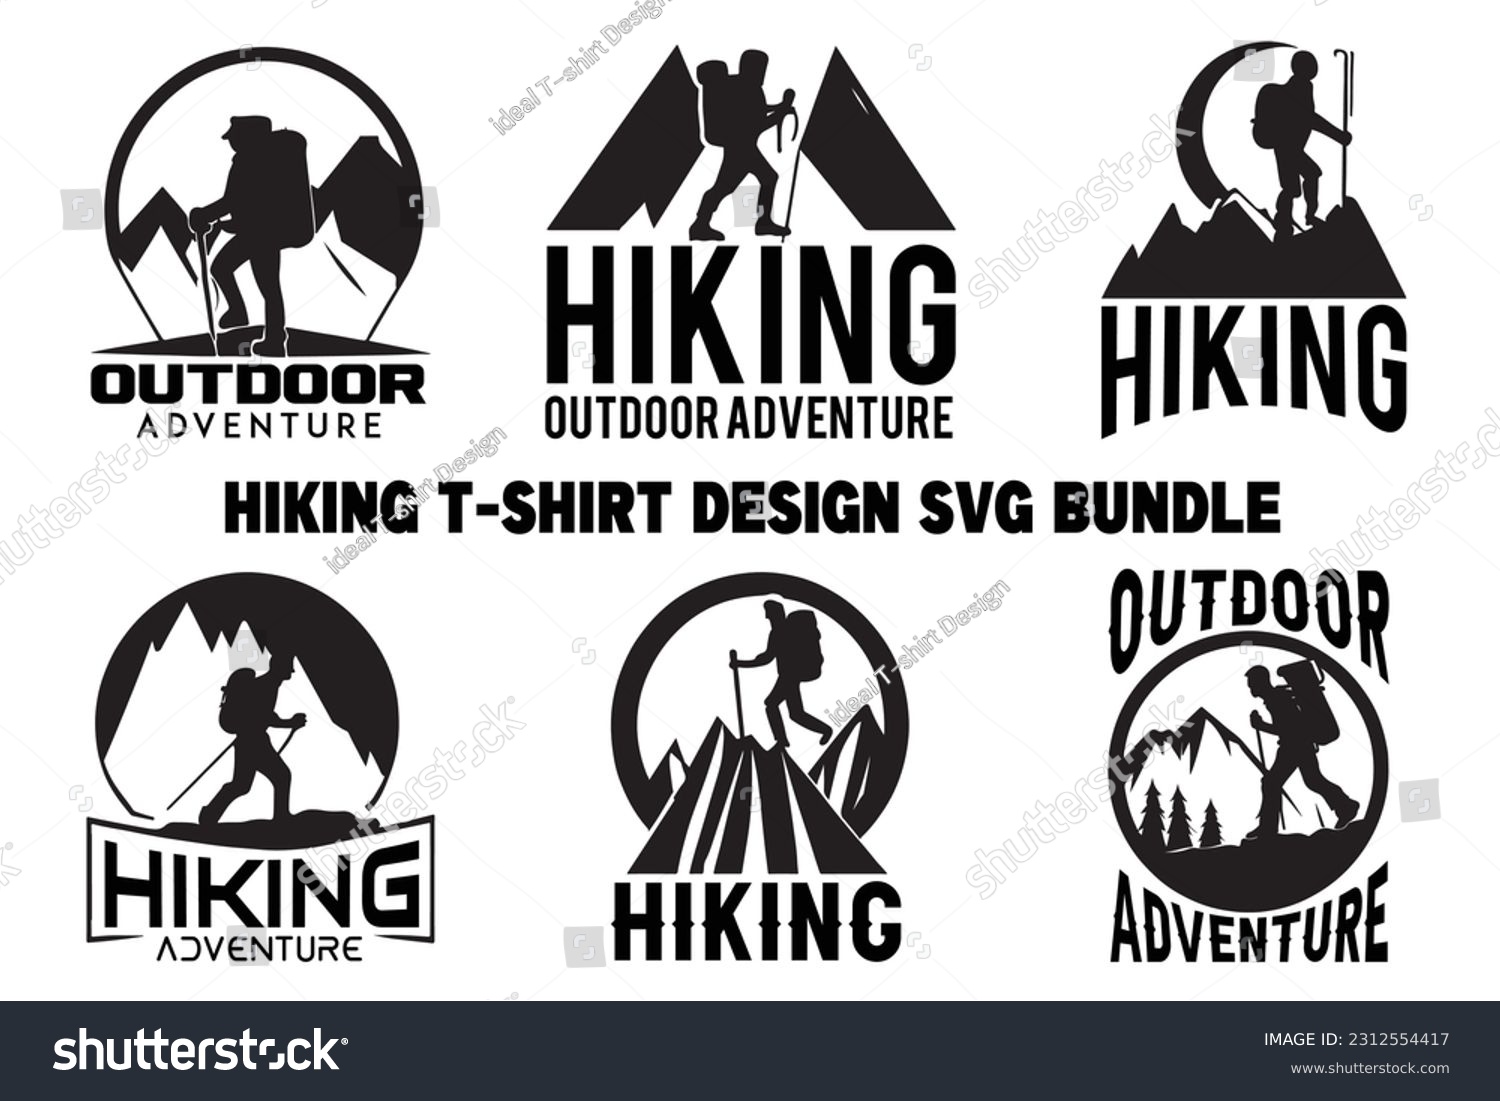 SVG of Hiking t-shirt design, Hiking SVG bundle, Hiking shirt designs in high demand, Adventure t-shirt designs, Mountain hiking SVG bundle svg